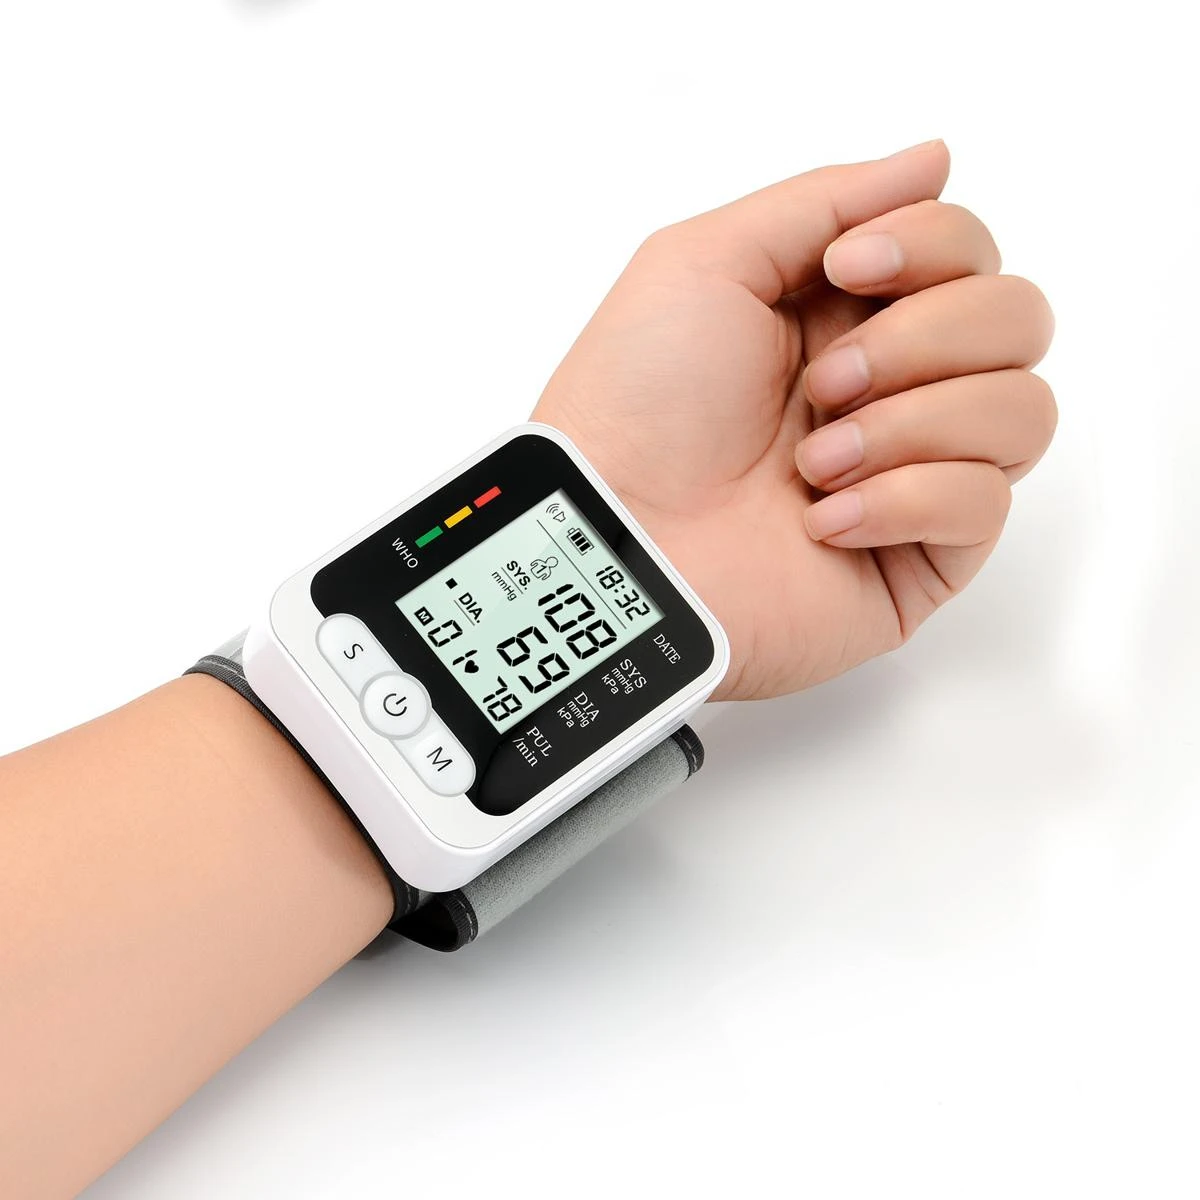 Automatic Digital Wrist Blood Pressure Monitor with Heart Rate Monitor/Wrist Digital Blood Pressure Monitor/Wrist type Digital sphygmomanometer